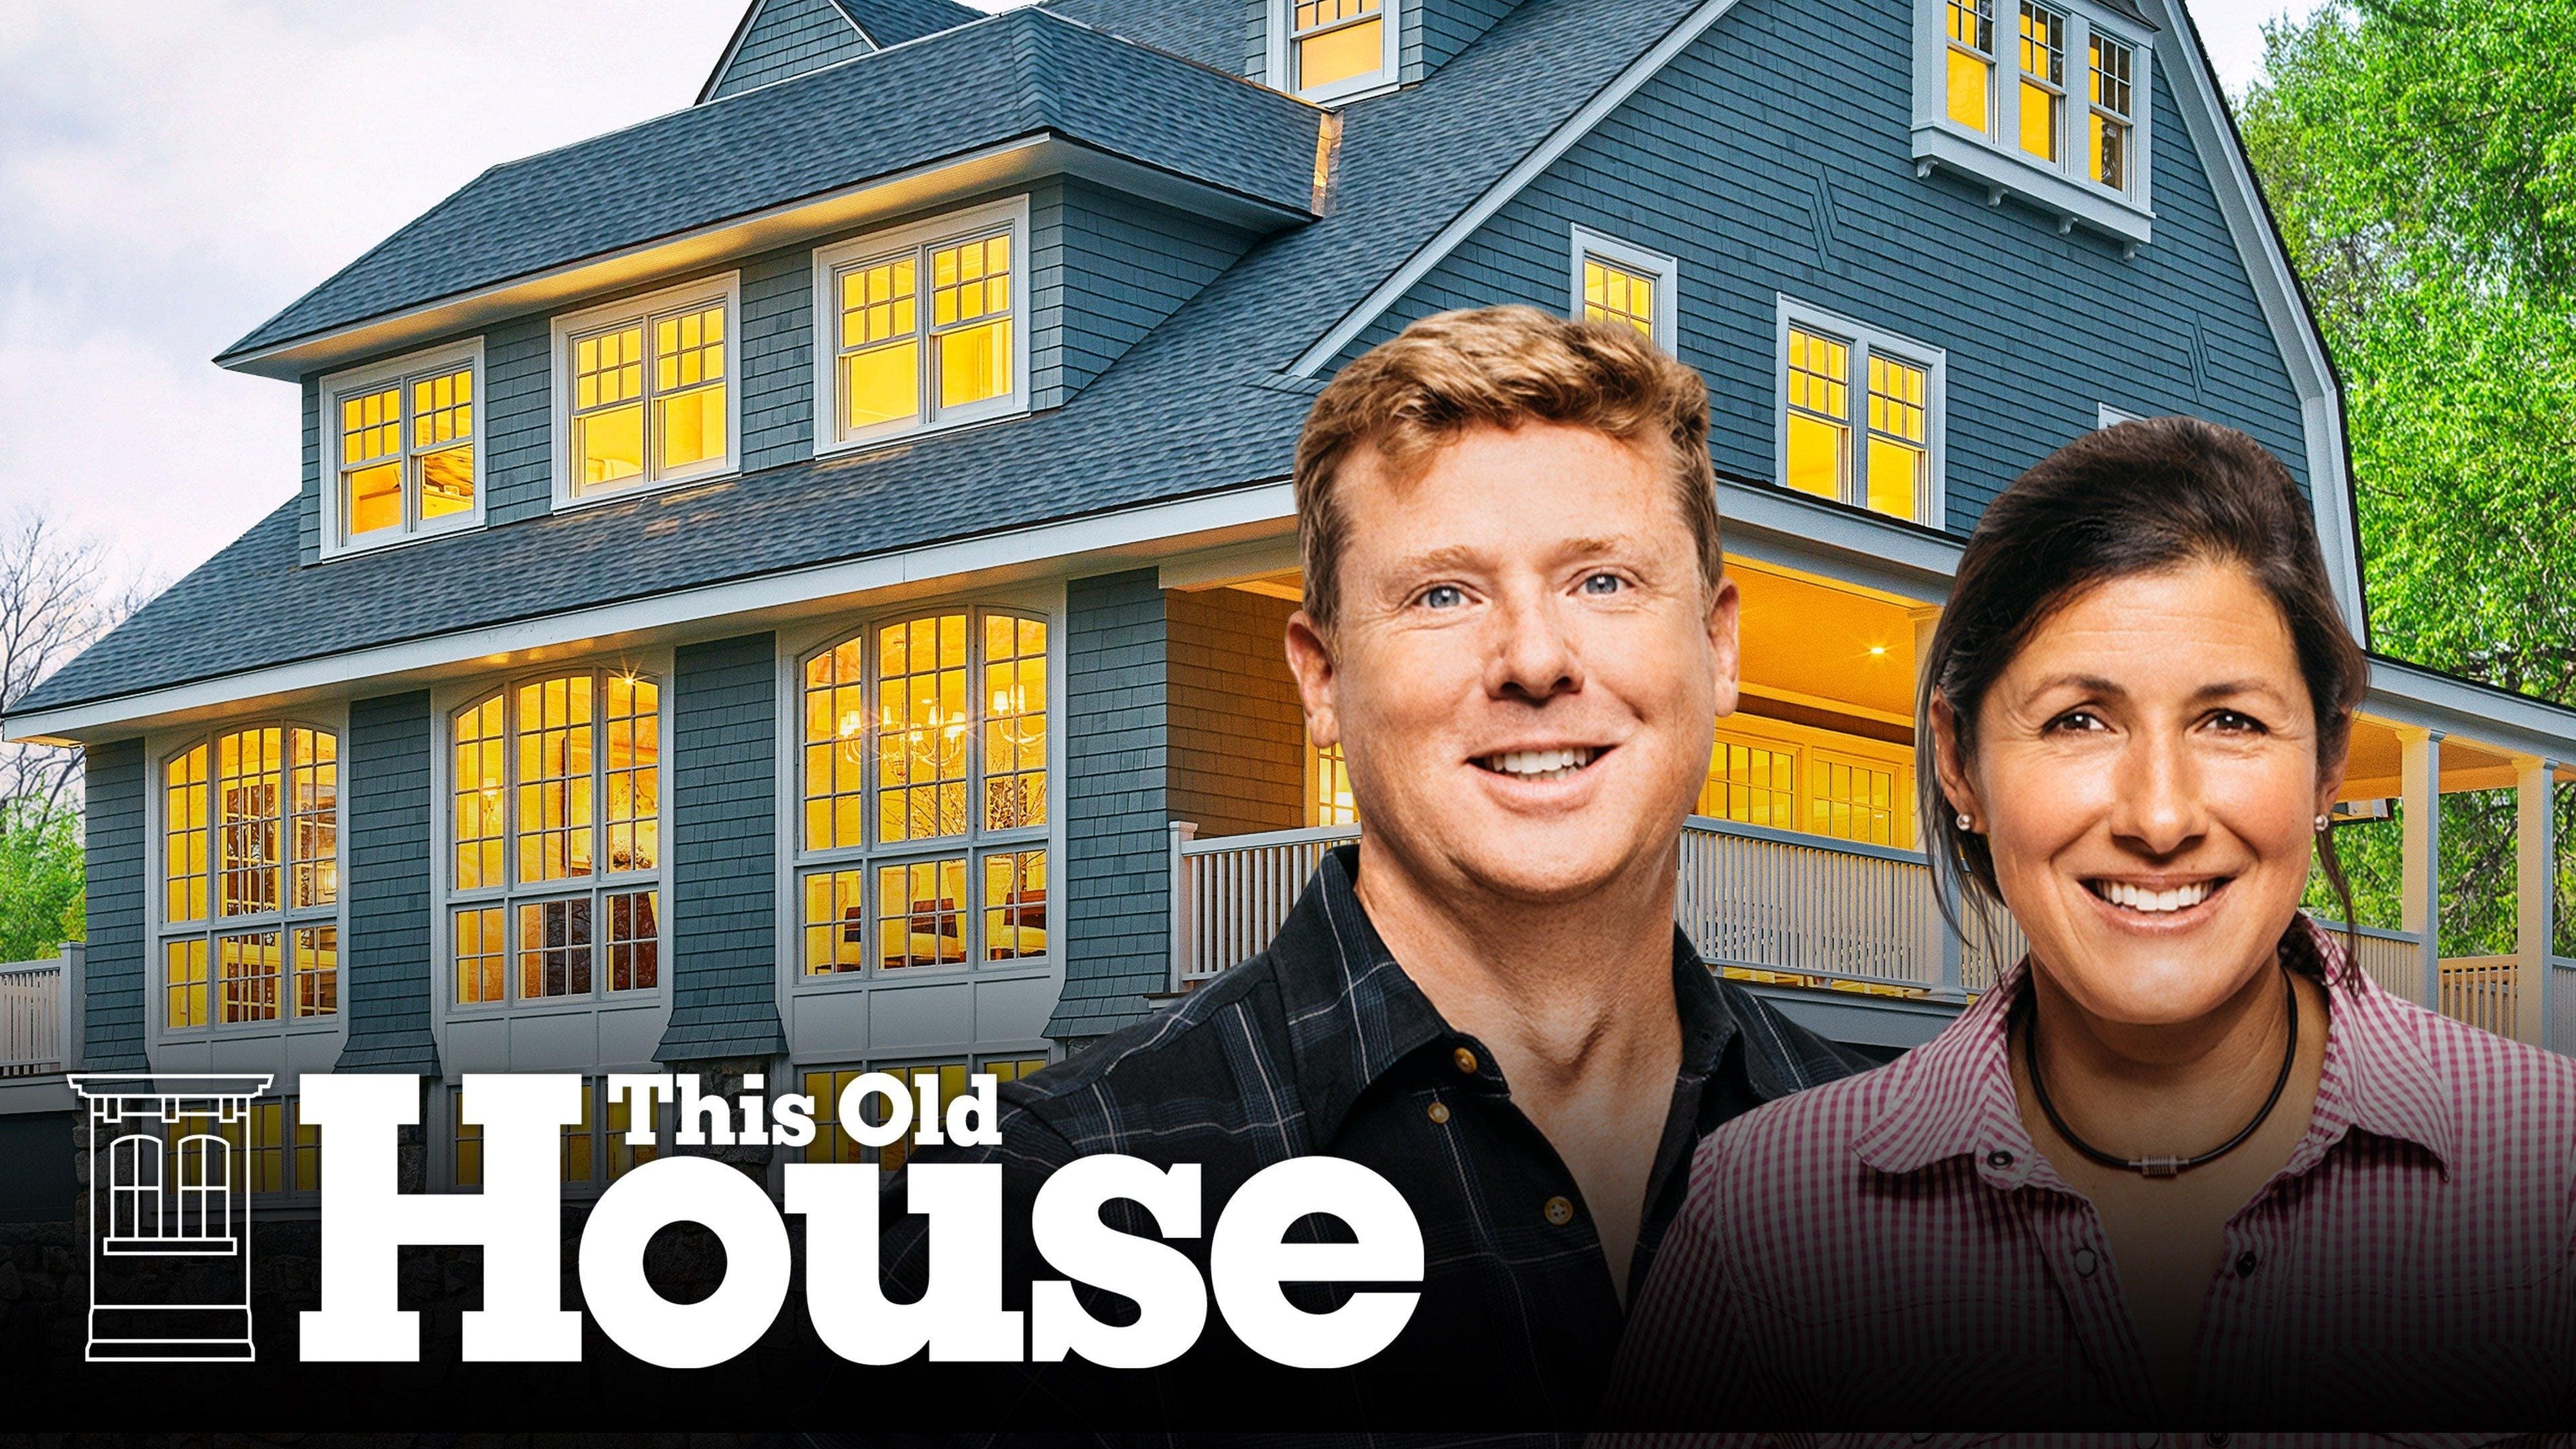 This Old House - Season 45 Episode 14